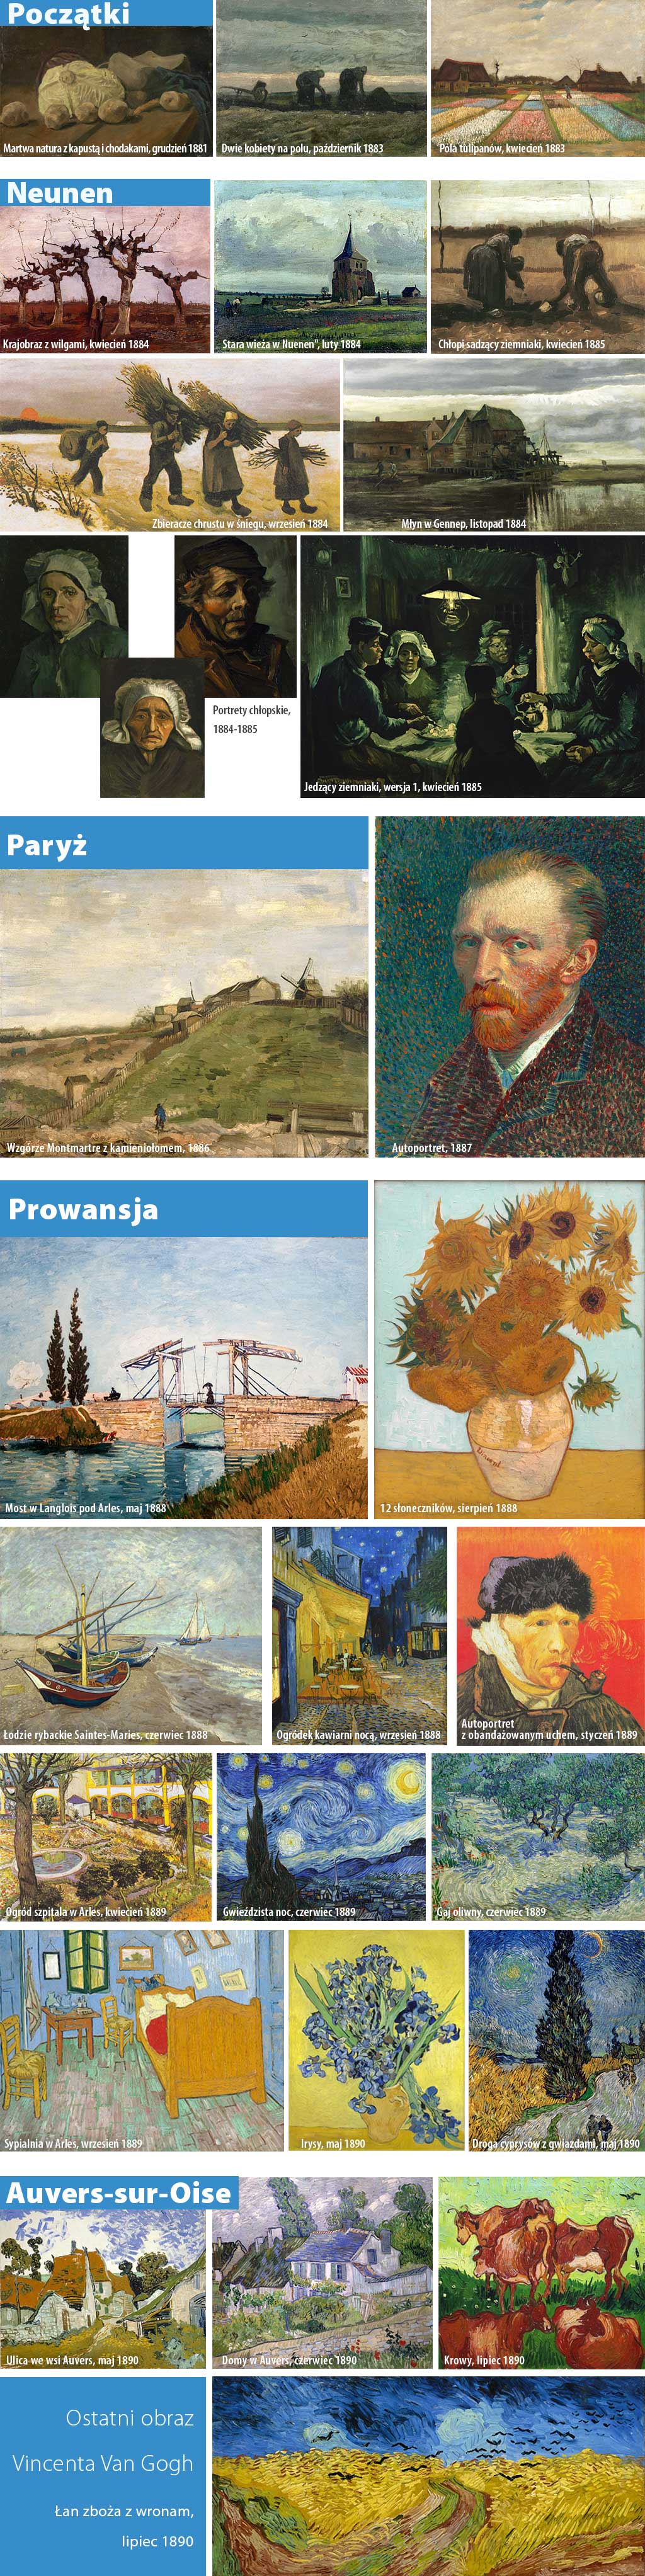 życiorys Van Gogha w obrazach